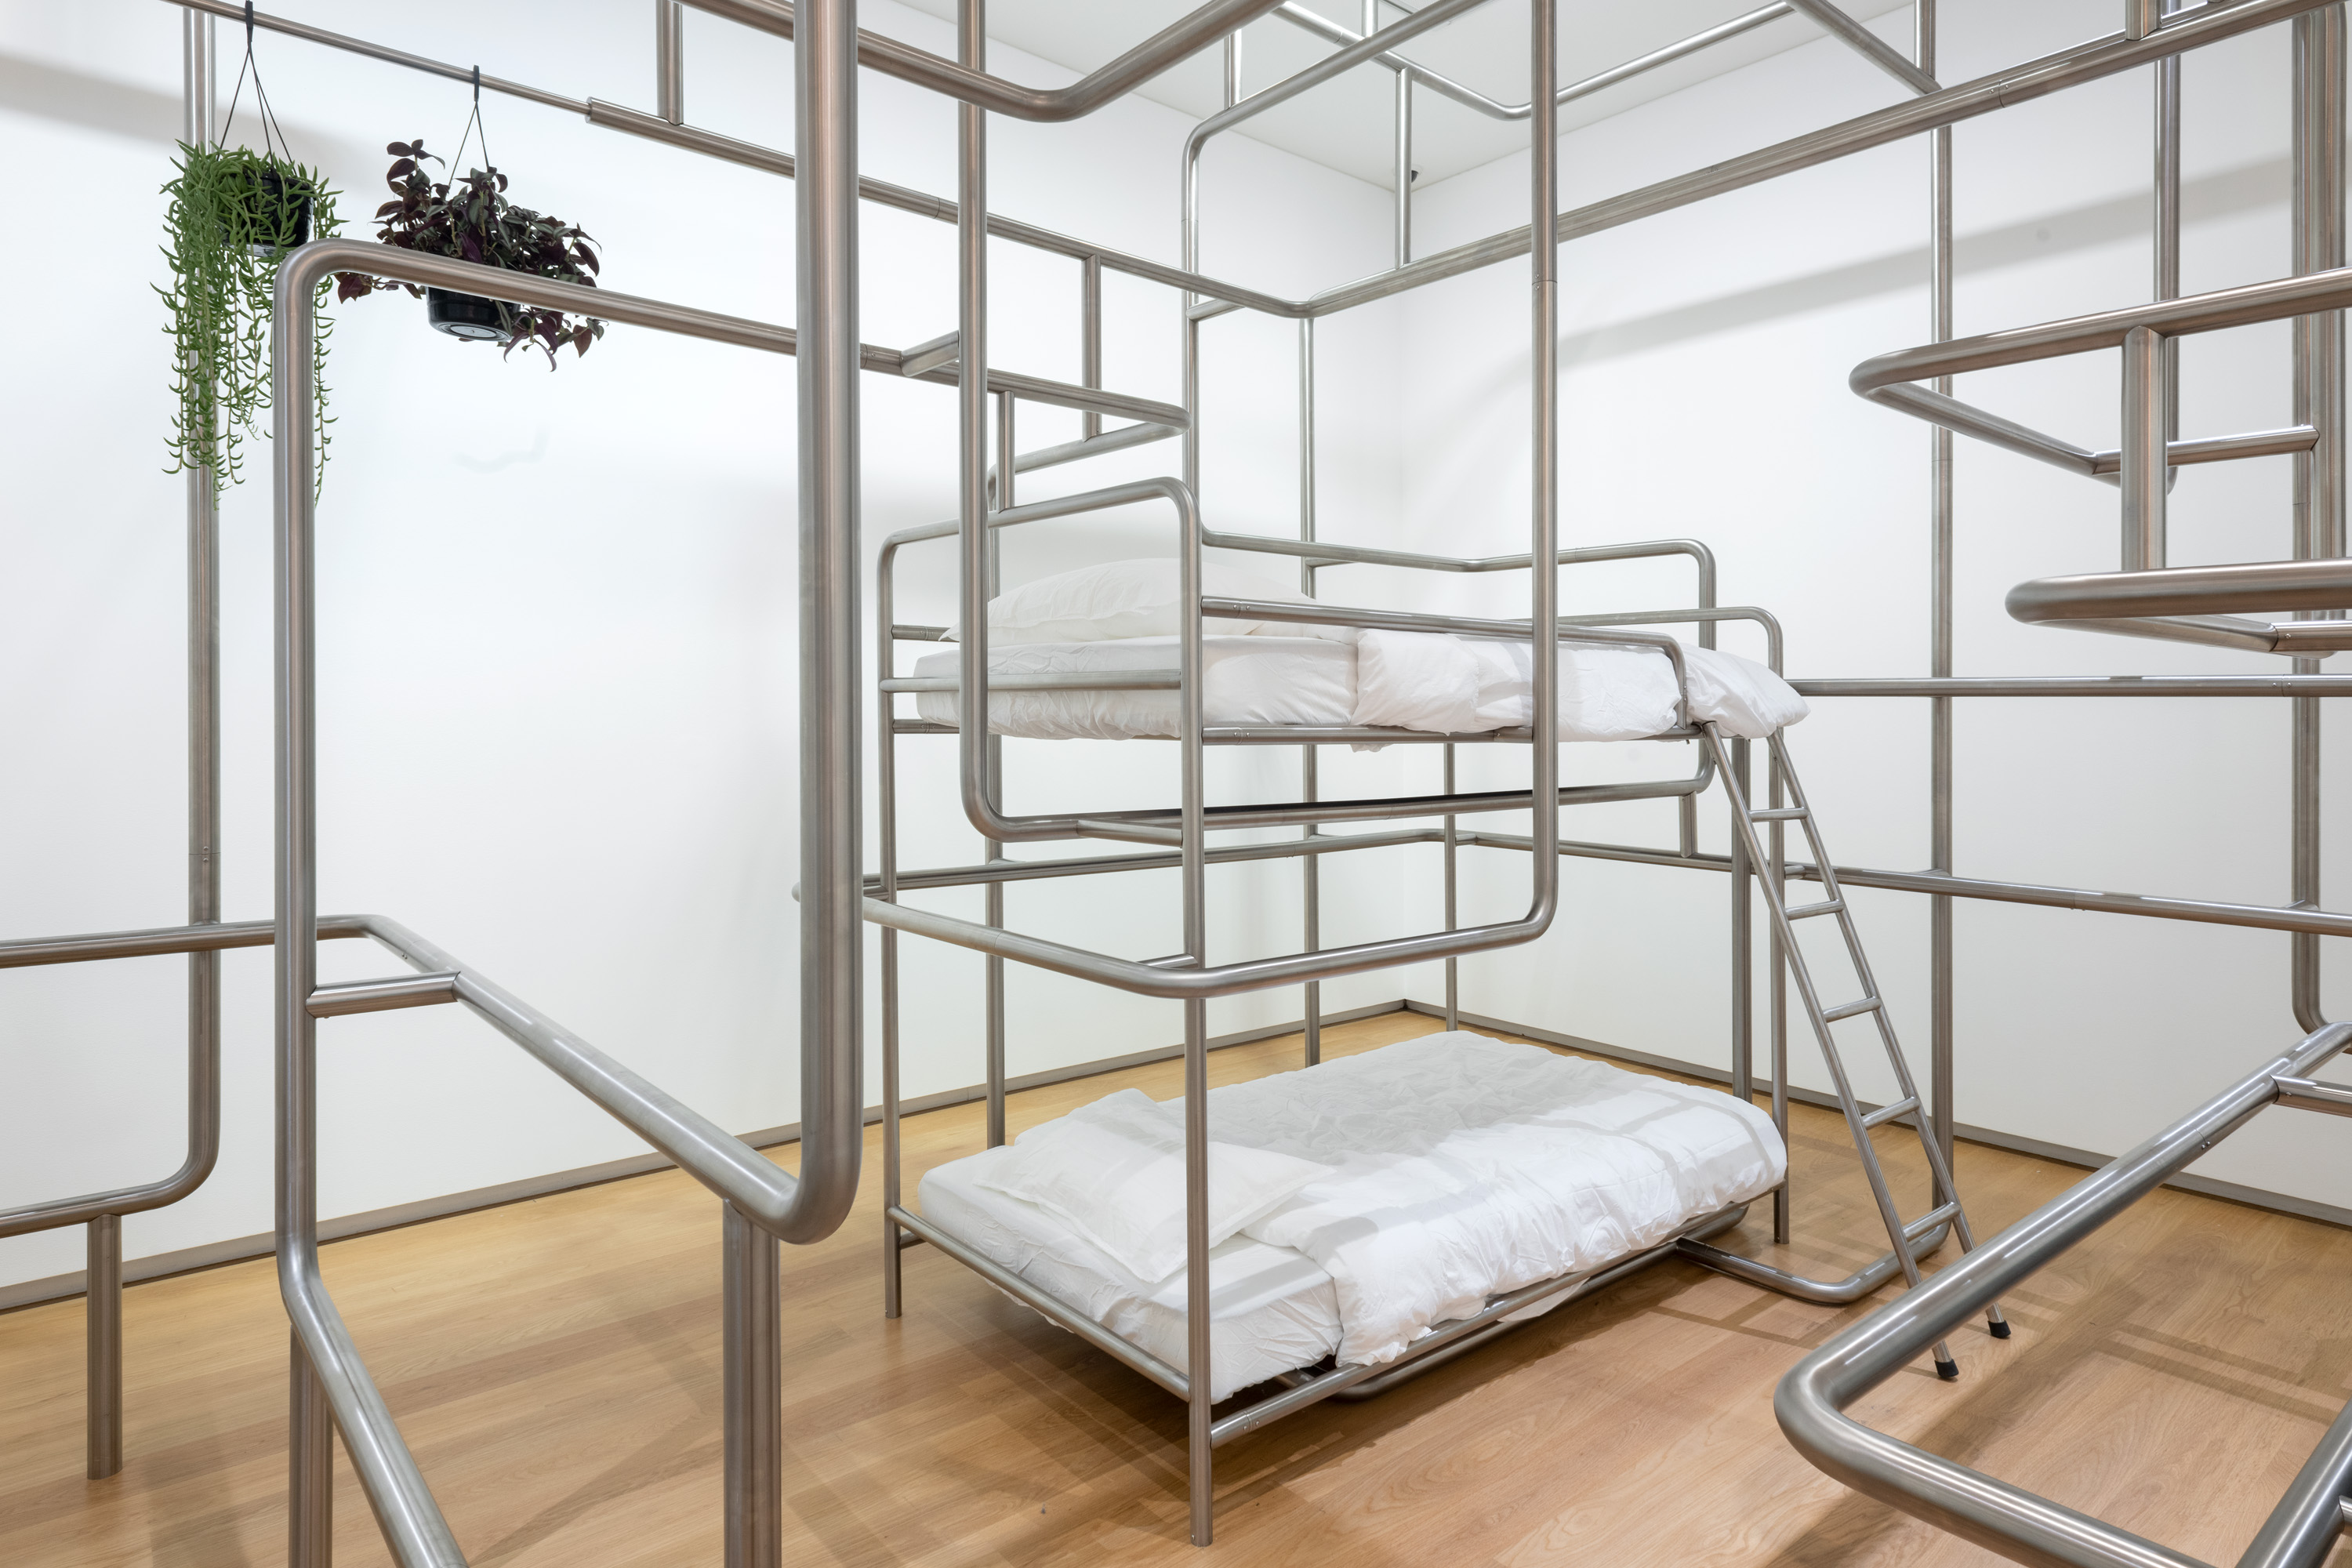 Yona Lee: An Arrangement for 5 Rooms